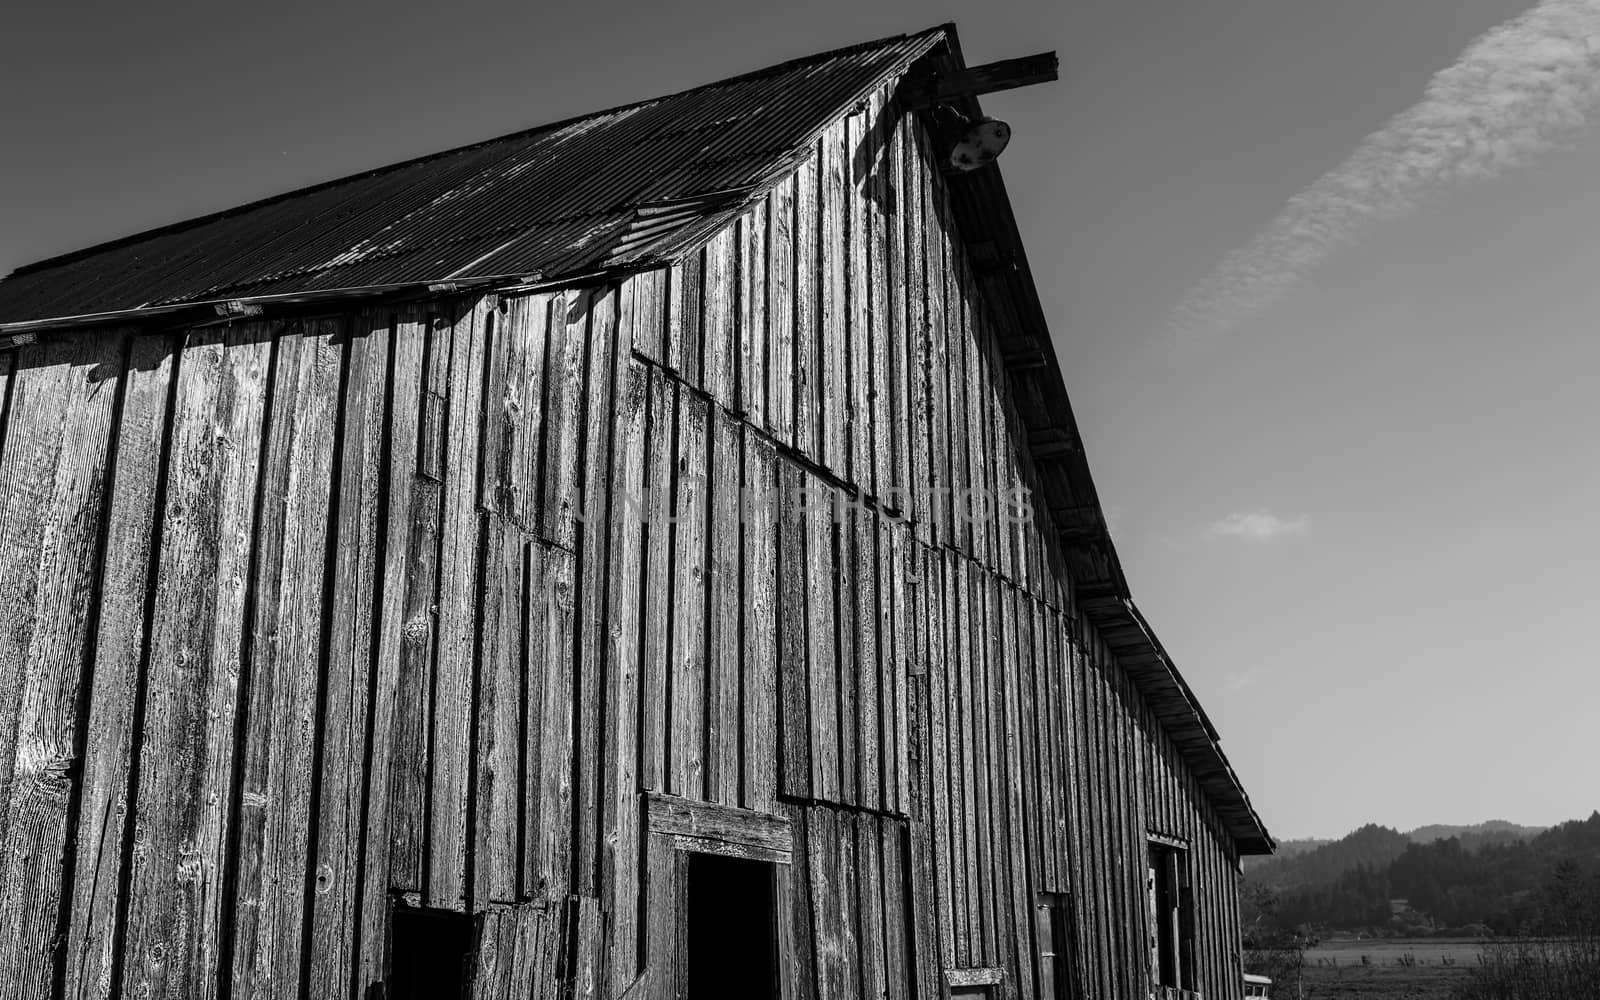 Abandoned Barn, Black and White Image by backyard_photography